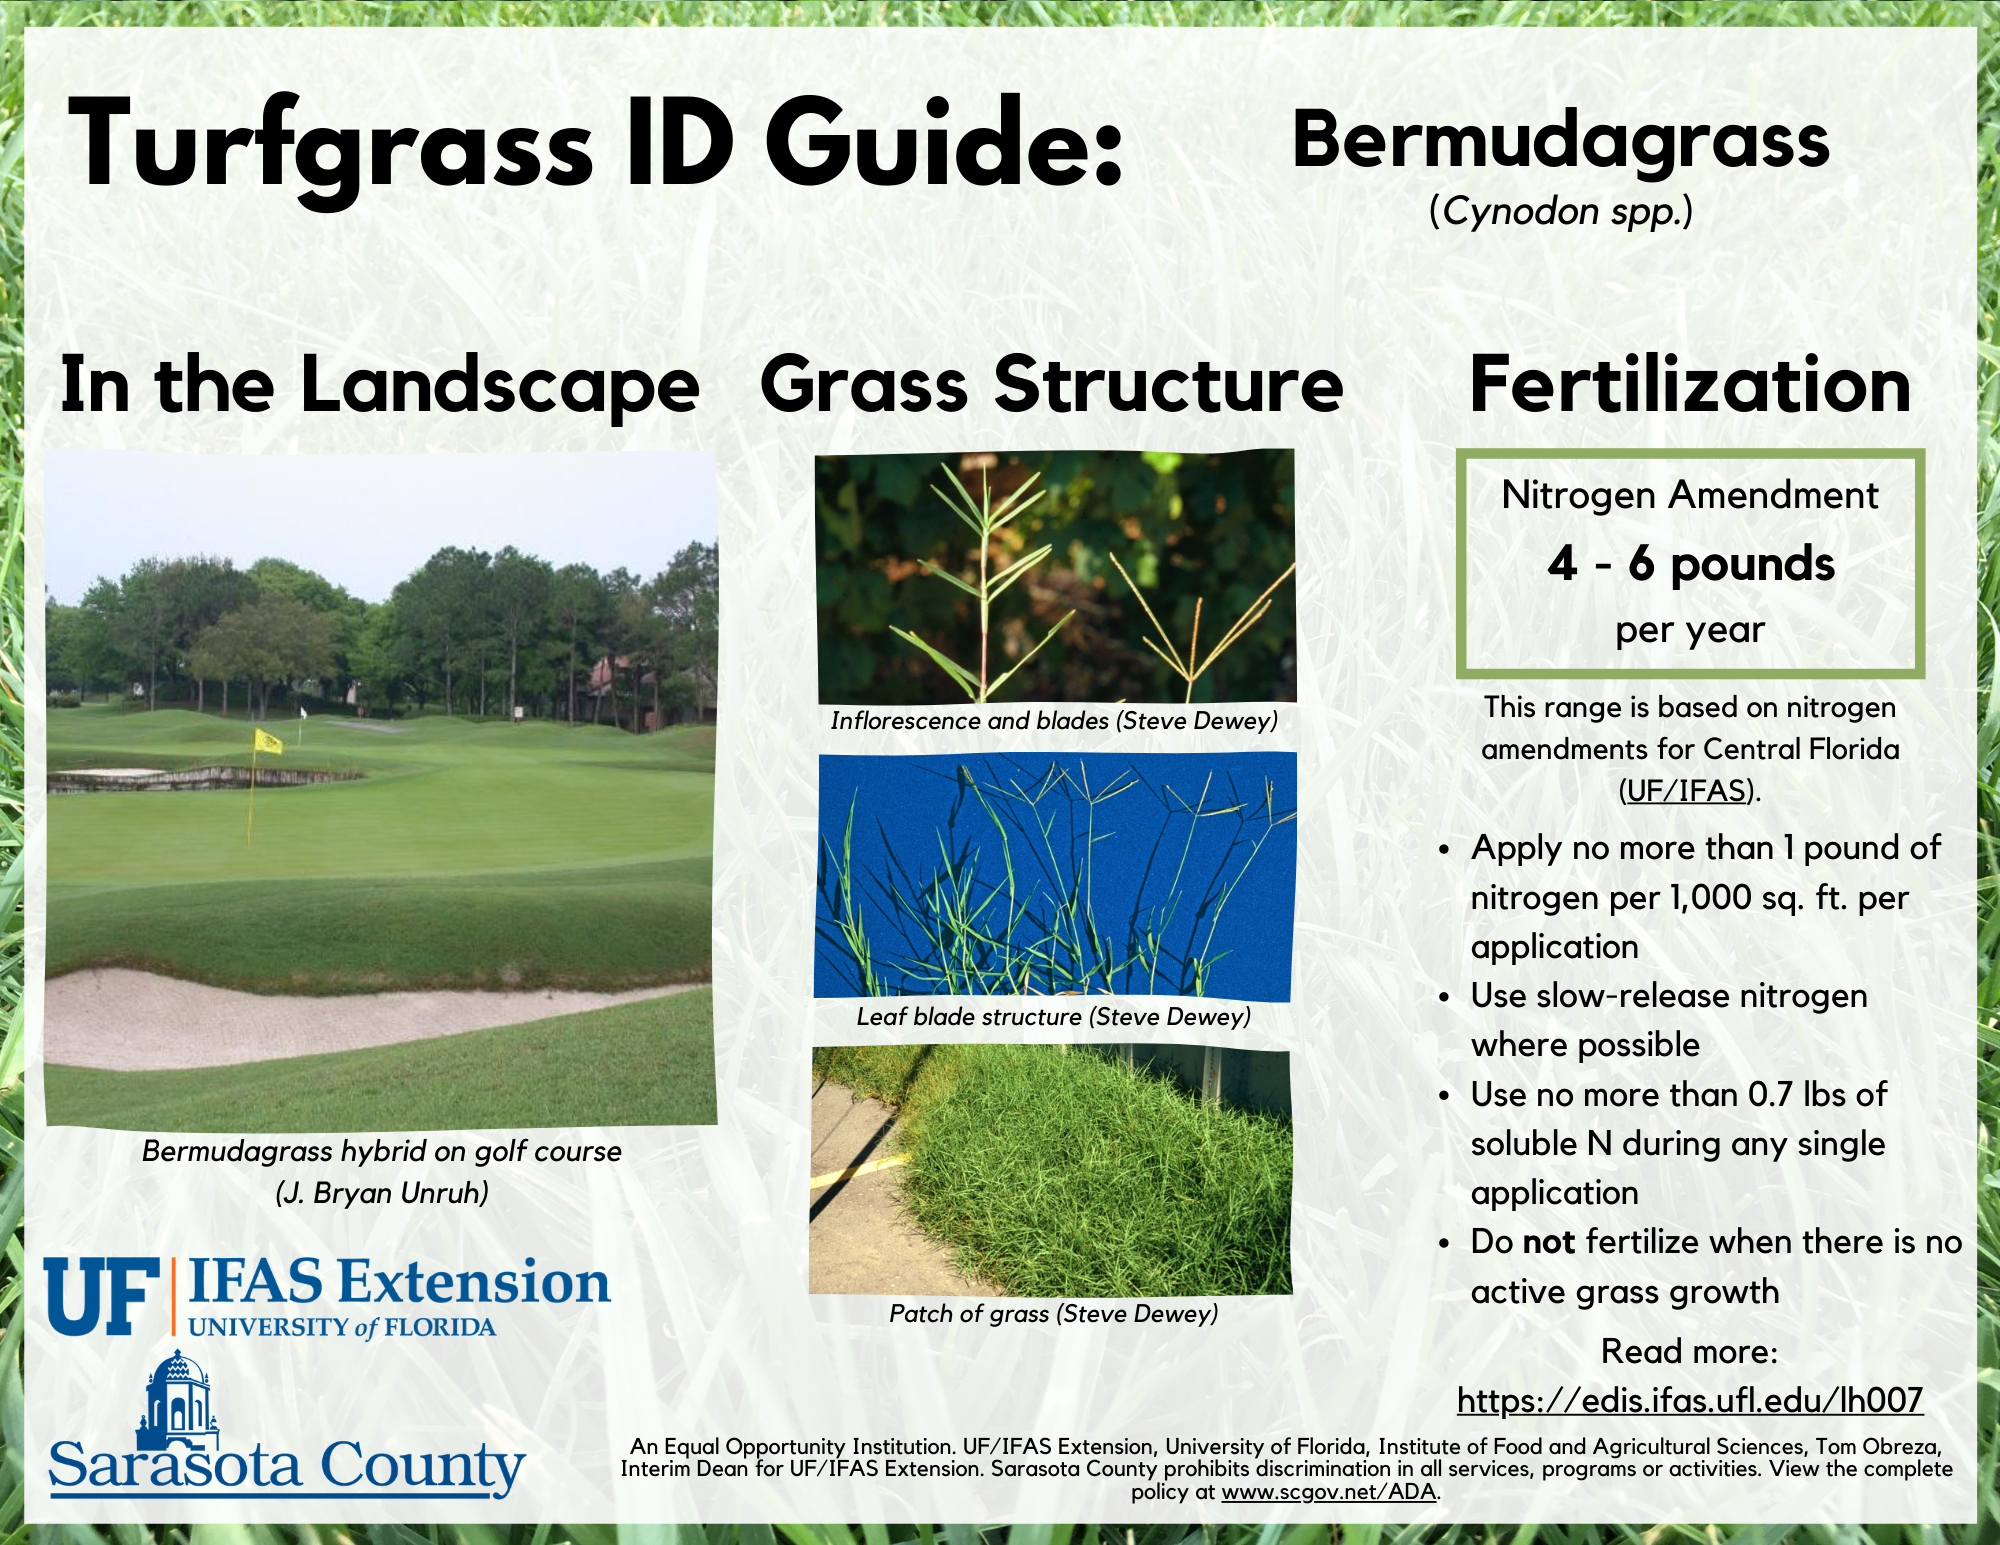 Guide to fertilizing Bermudagrass in Sarasota County